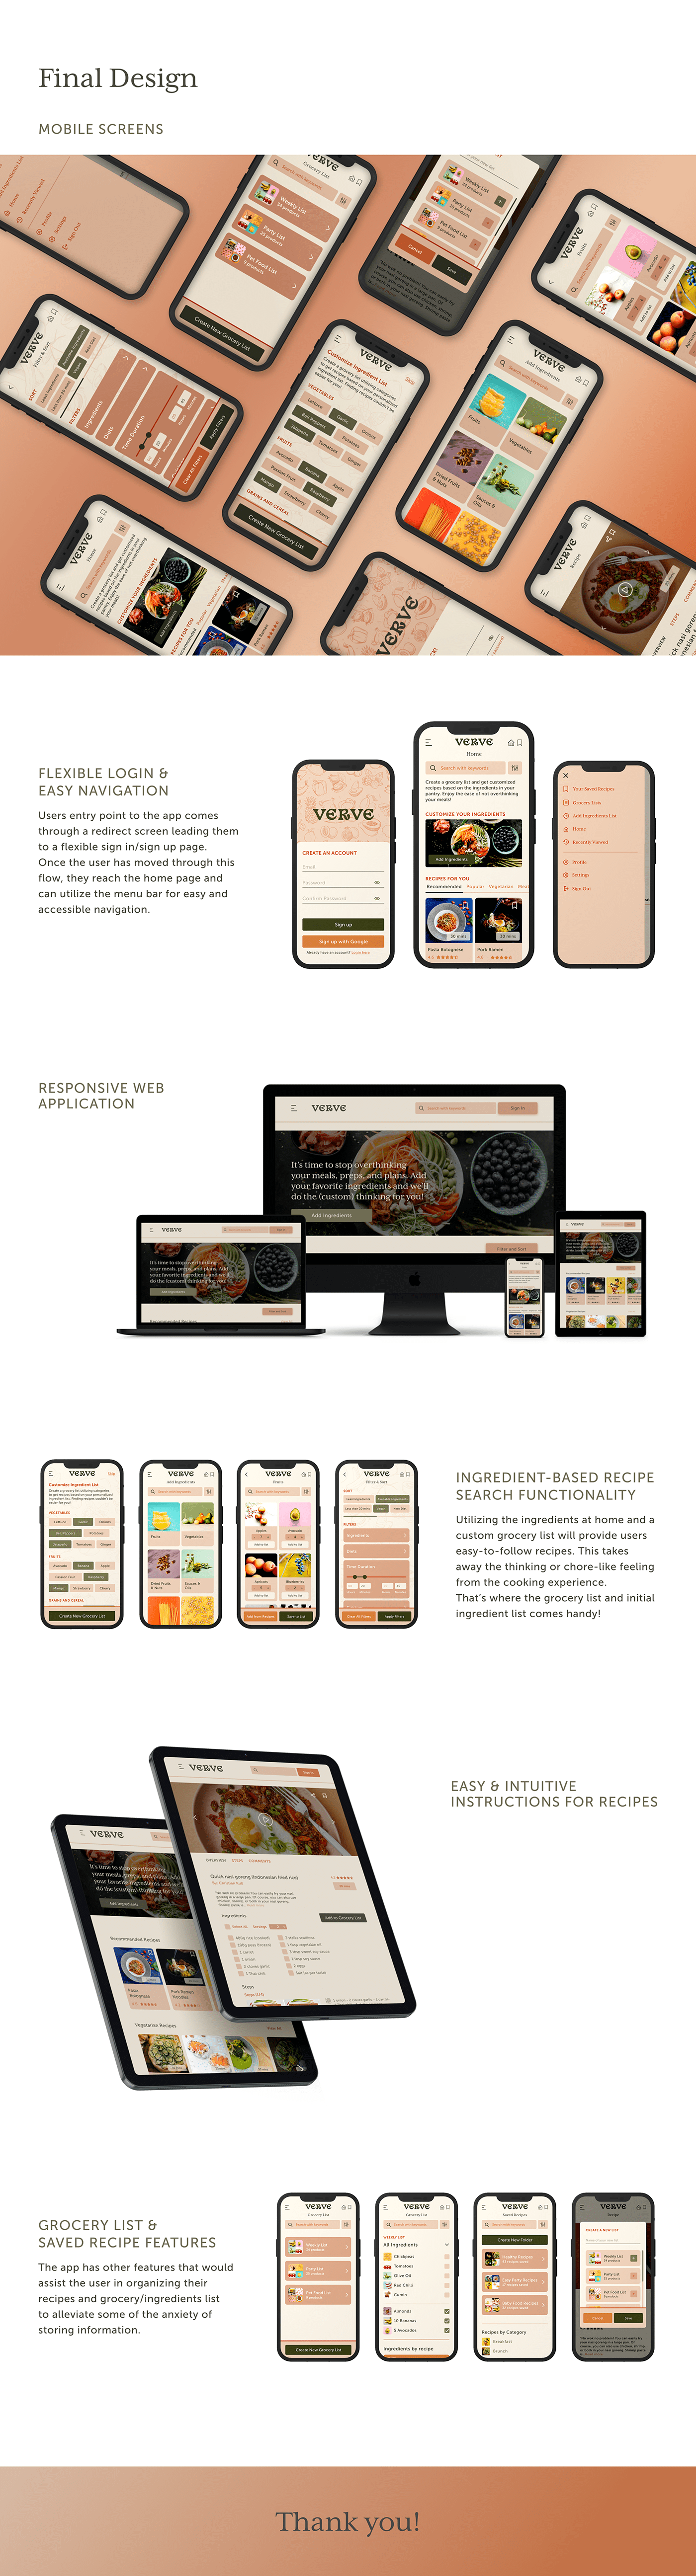 cooking app recipe app Responsive web design Style Guide ui design UI Design process UX design UX Design Process visual identity wireframes